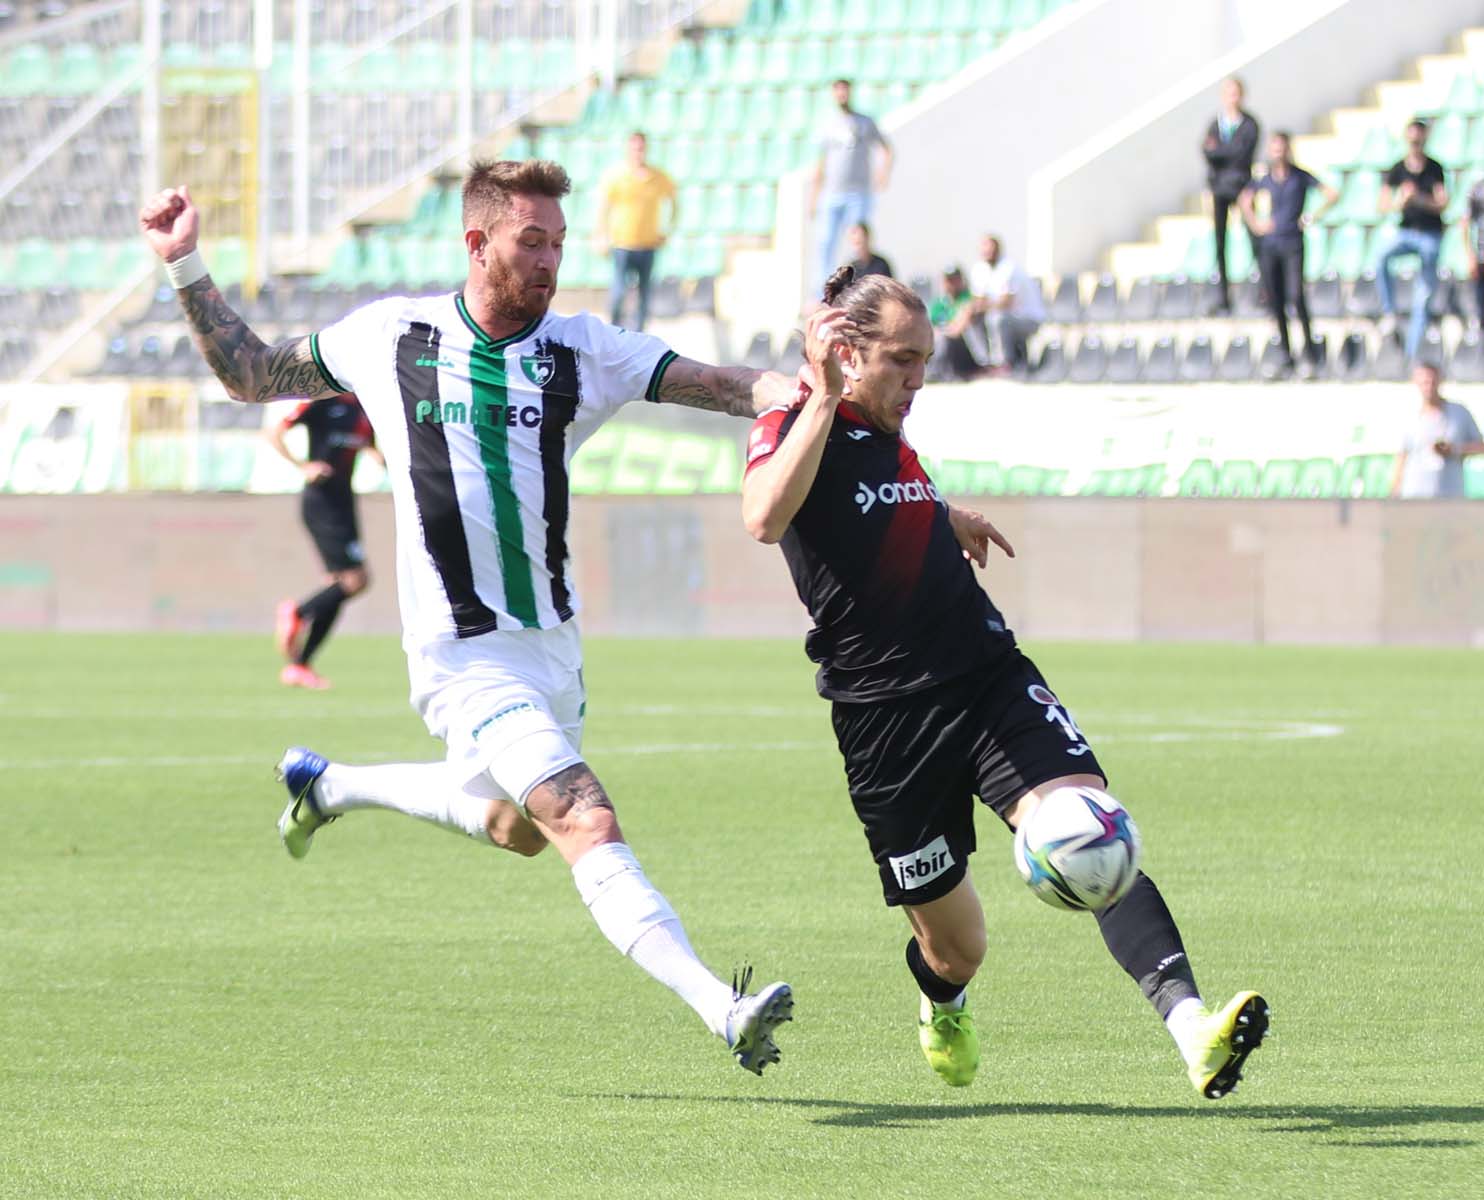 Altaş Denizlispor 2 -1 Gençlerbirliği | Maç sonucu 